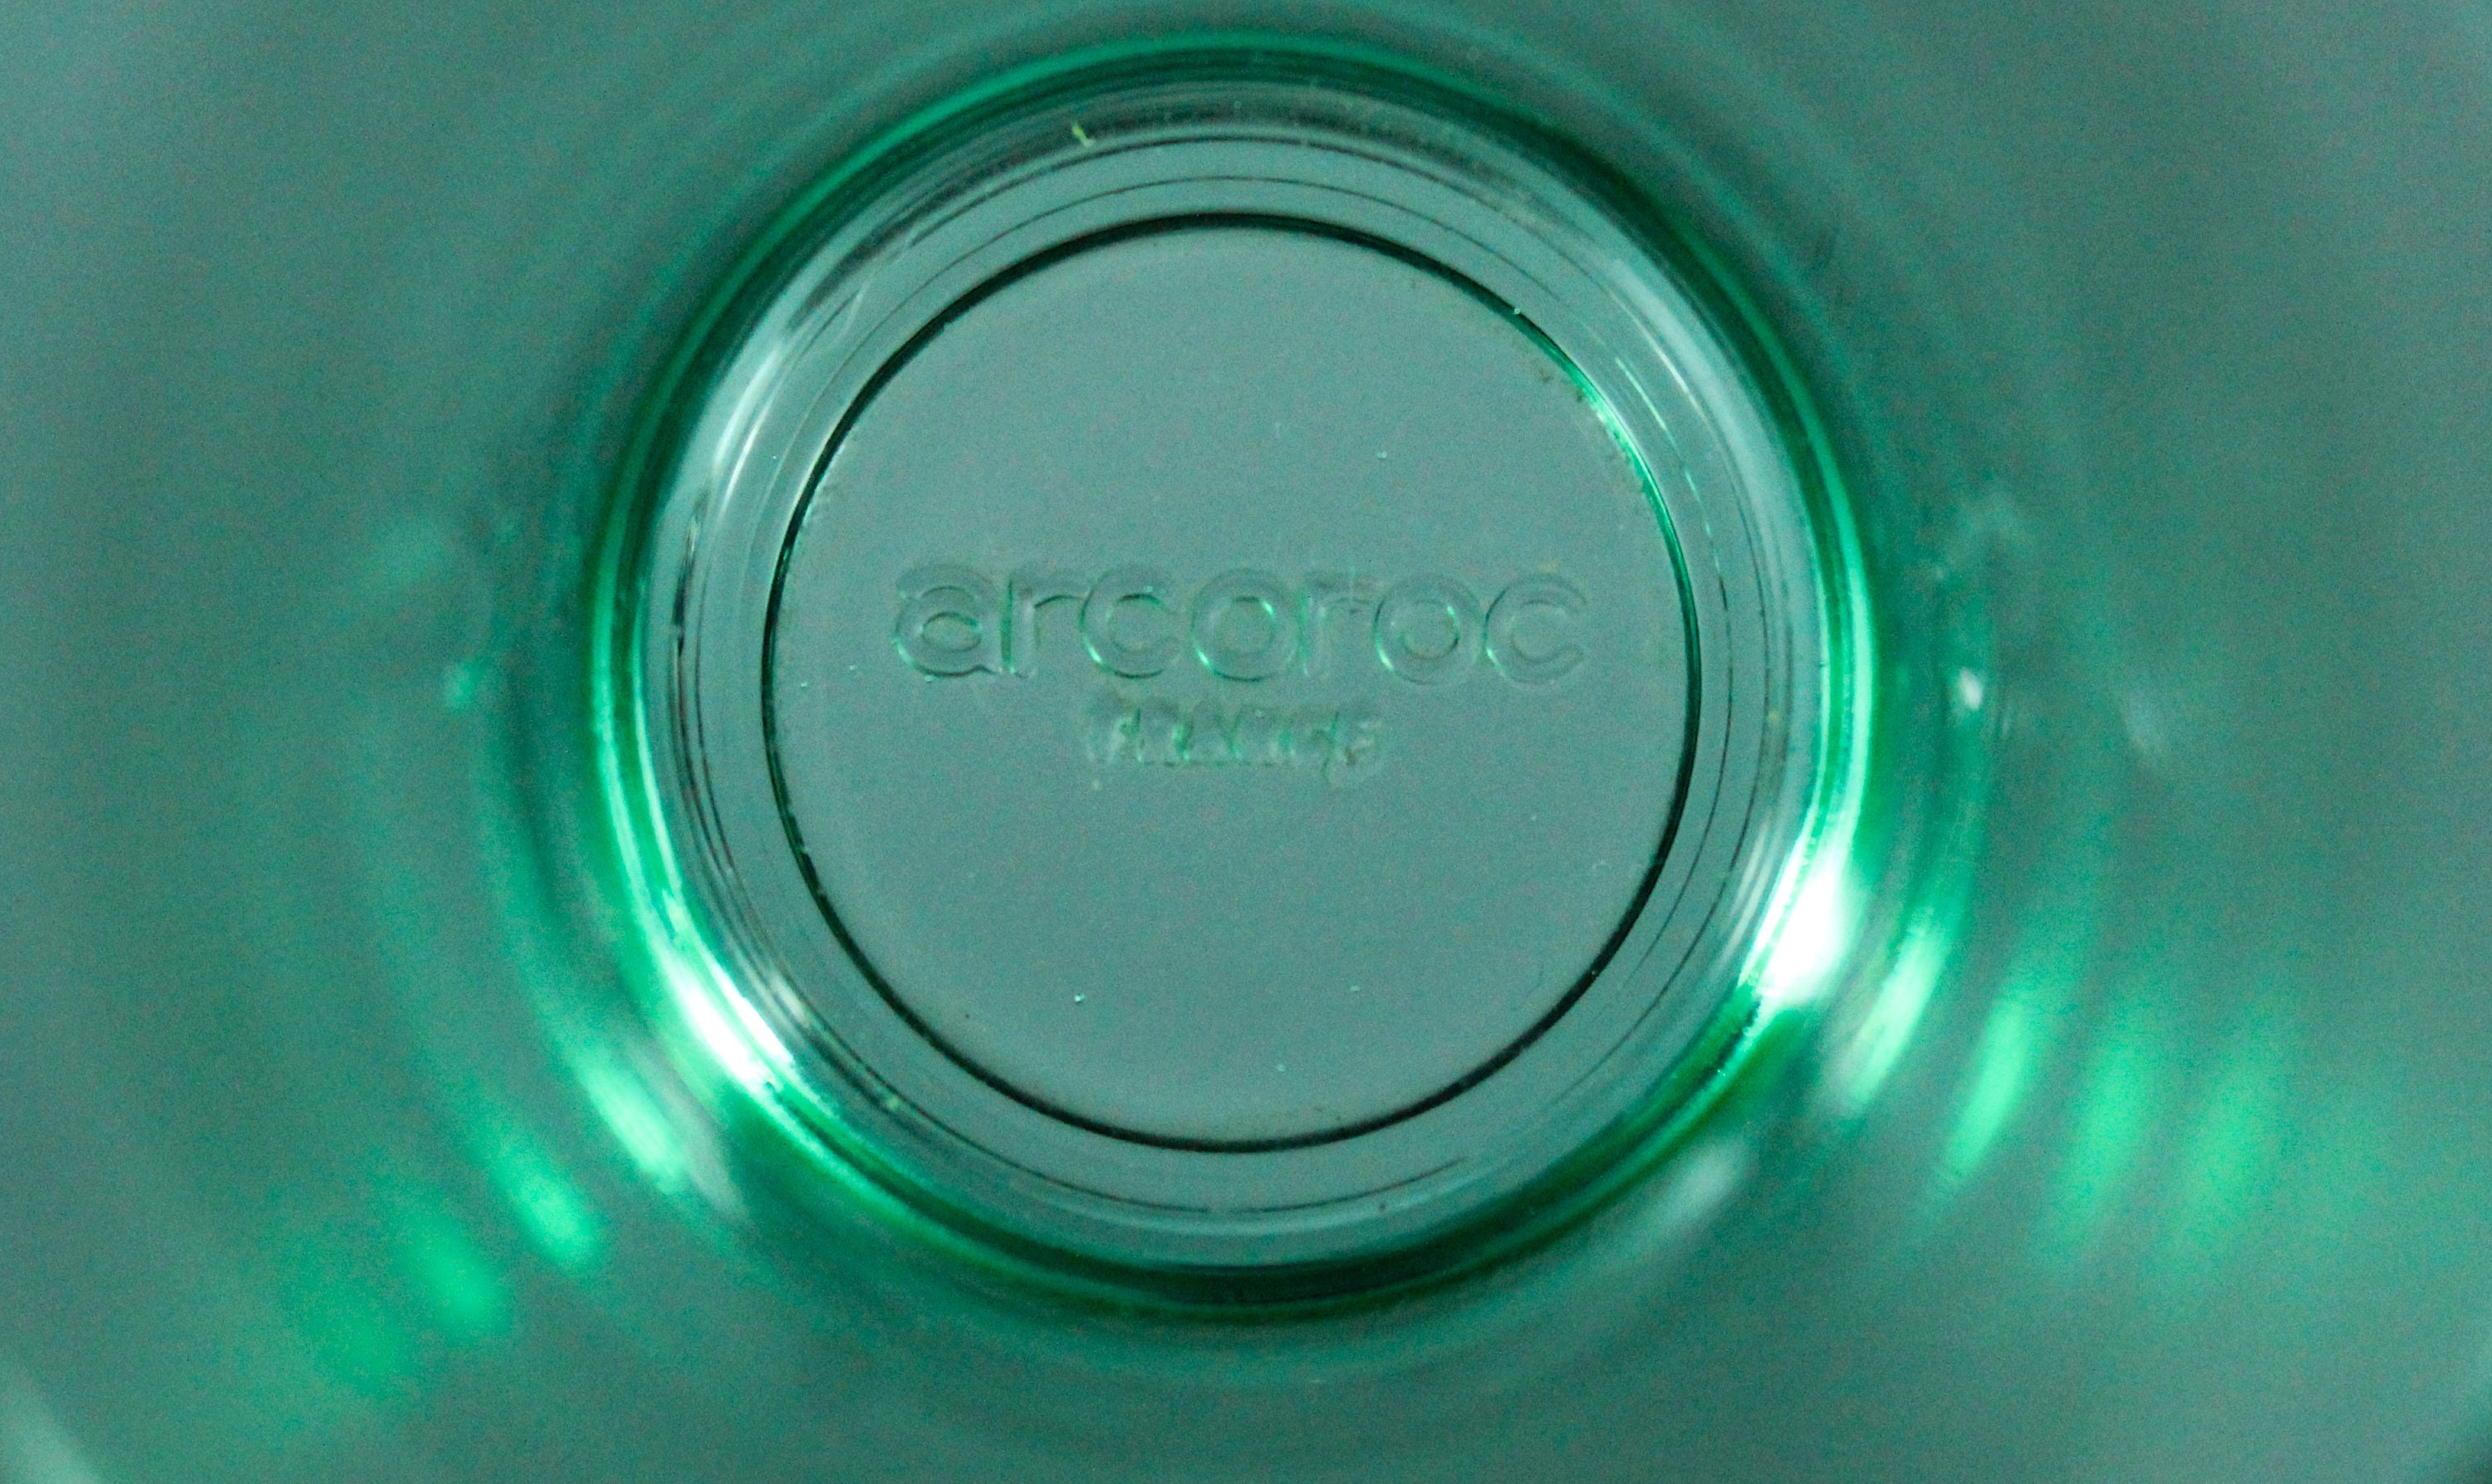 6 GLASSES 8 Cl Retro Emerald Green Tempered Glass Arcoroc France 